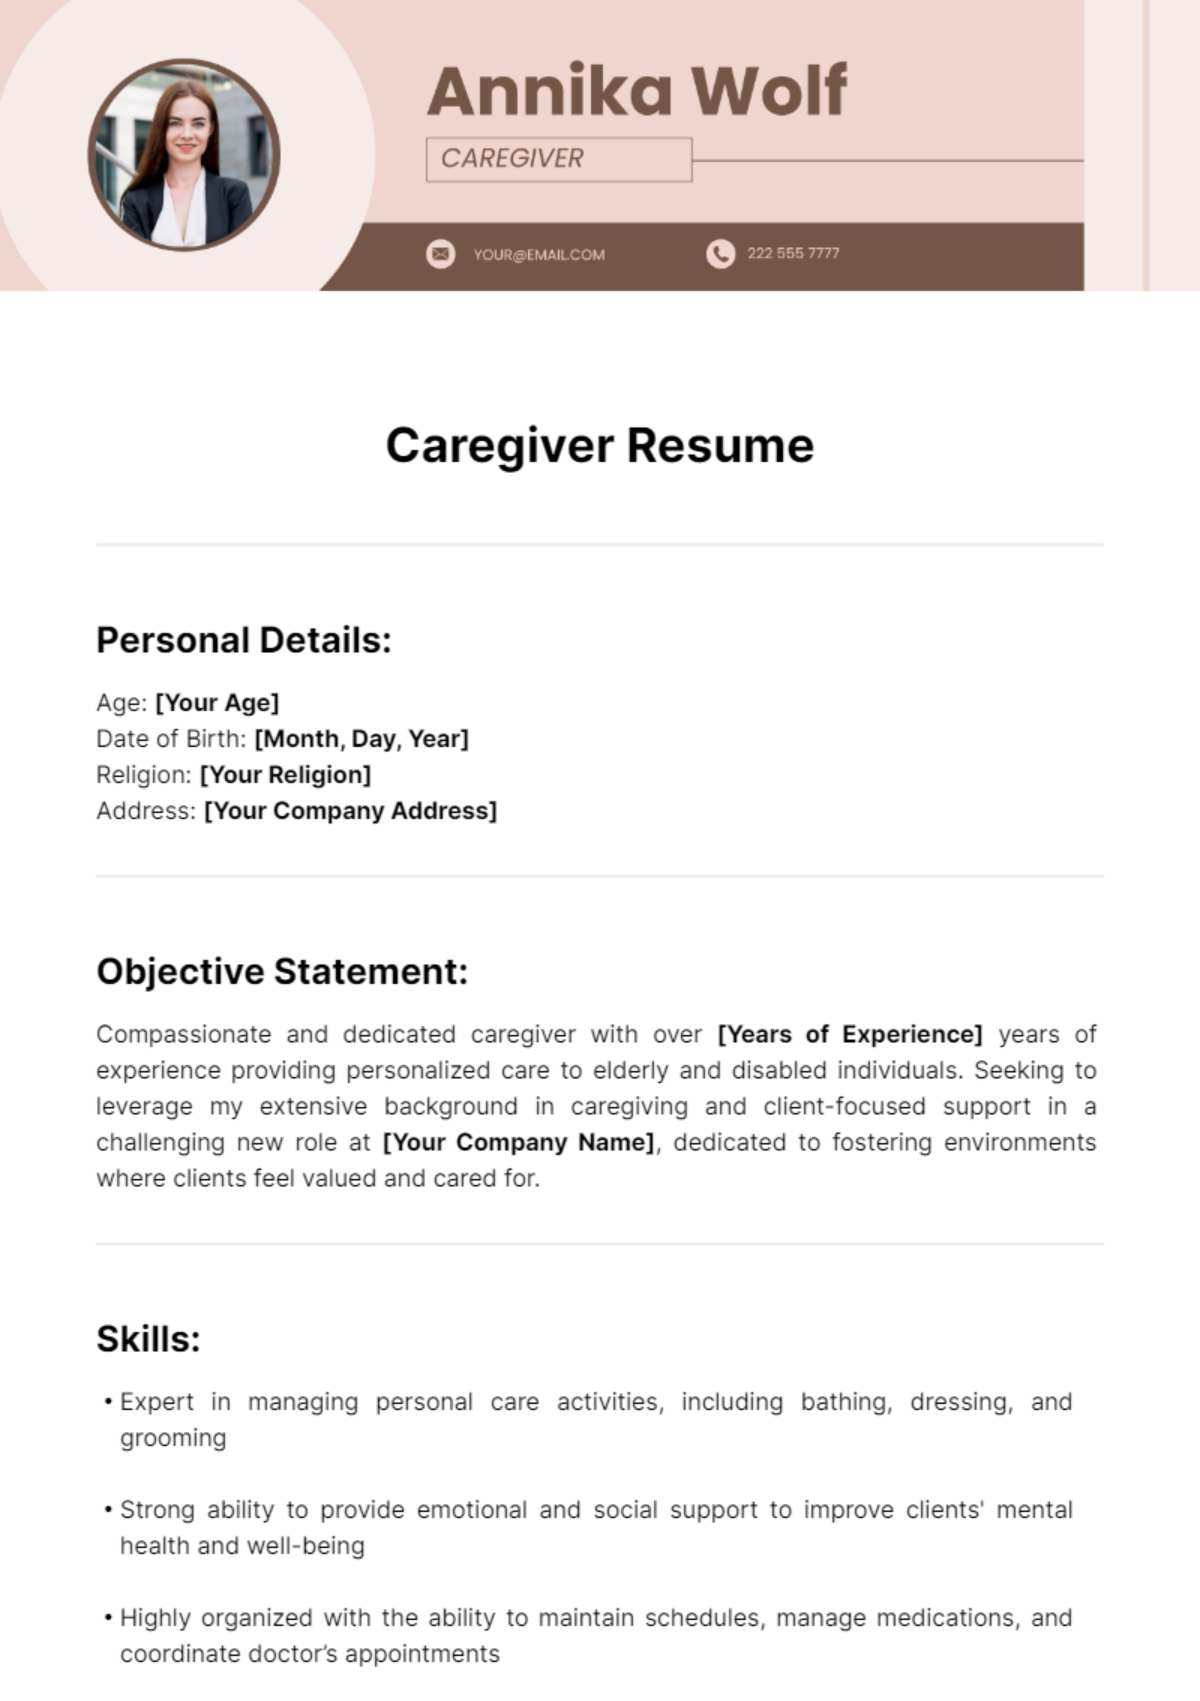 Caregiver Resume Template